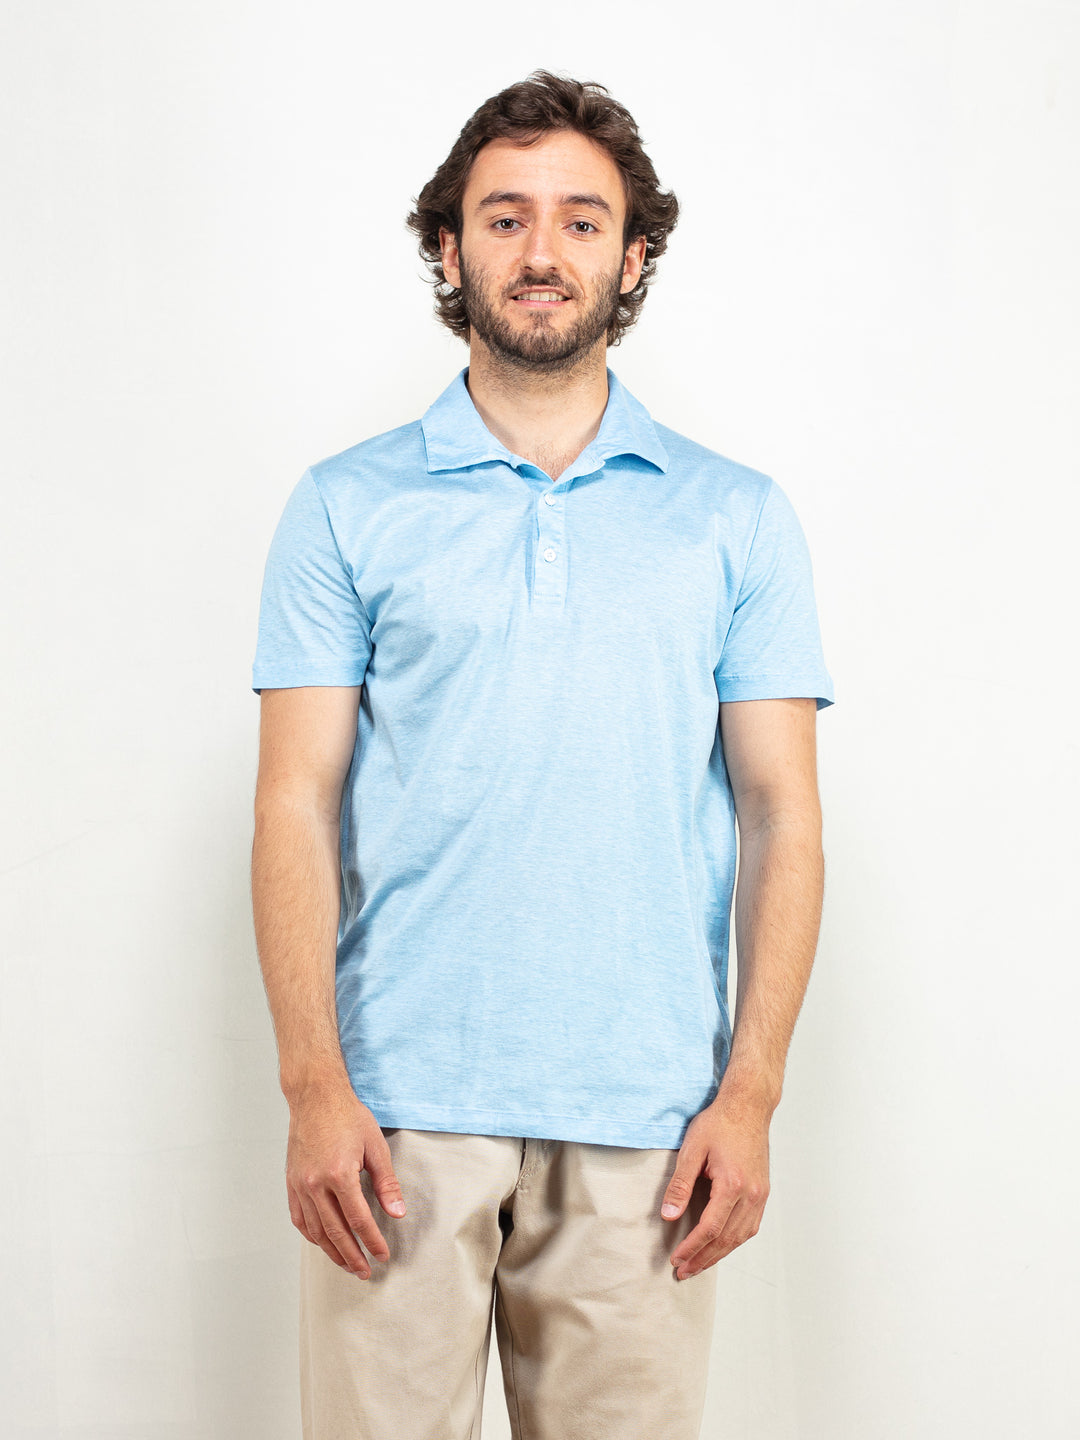 Men Polo Shirt 90's vintage light summer shirt short sleeve blue shirt handmade shirt minimalist modern shirt men clothing size medium m